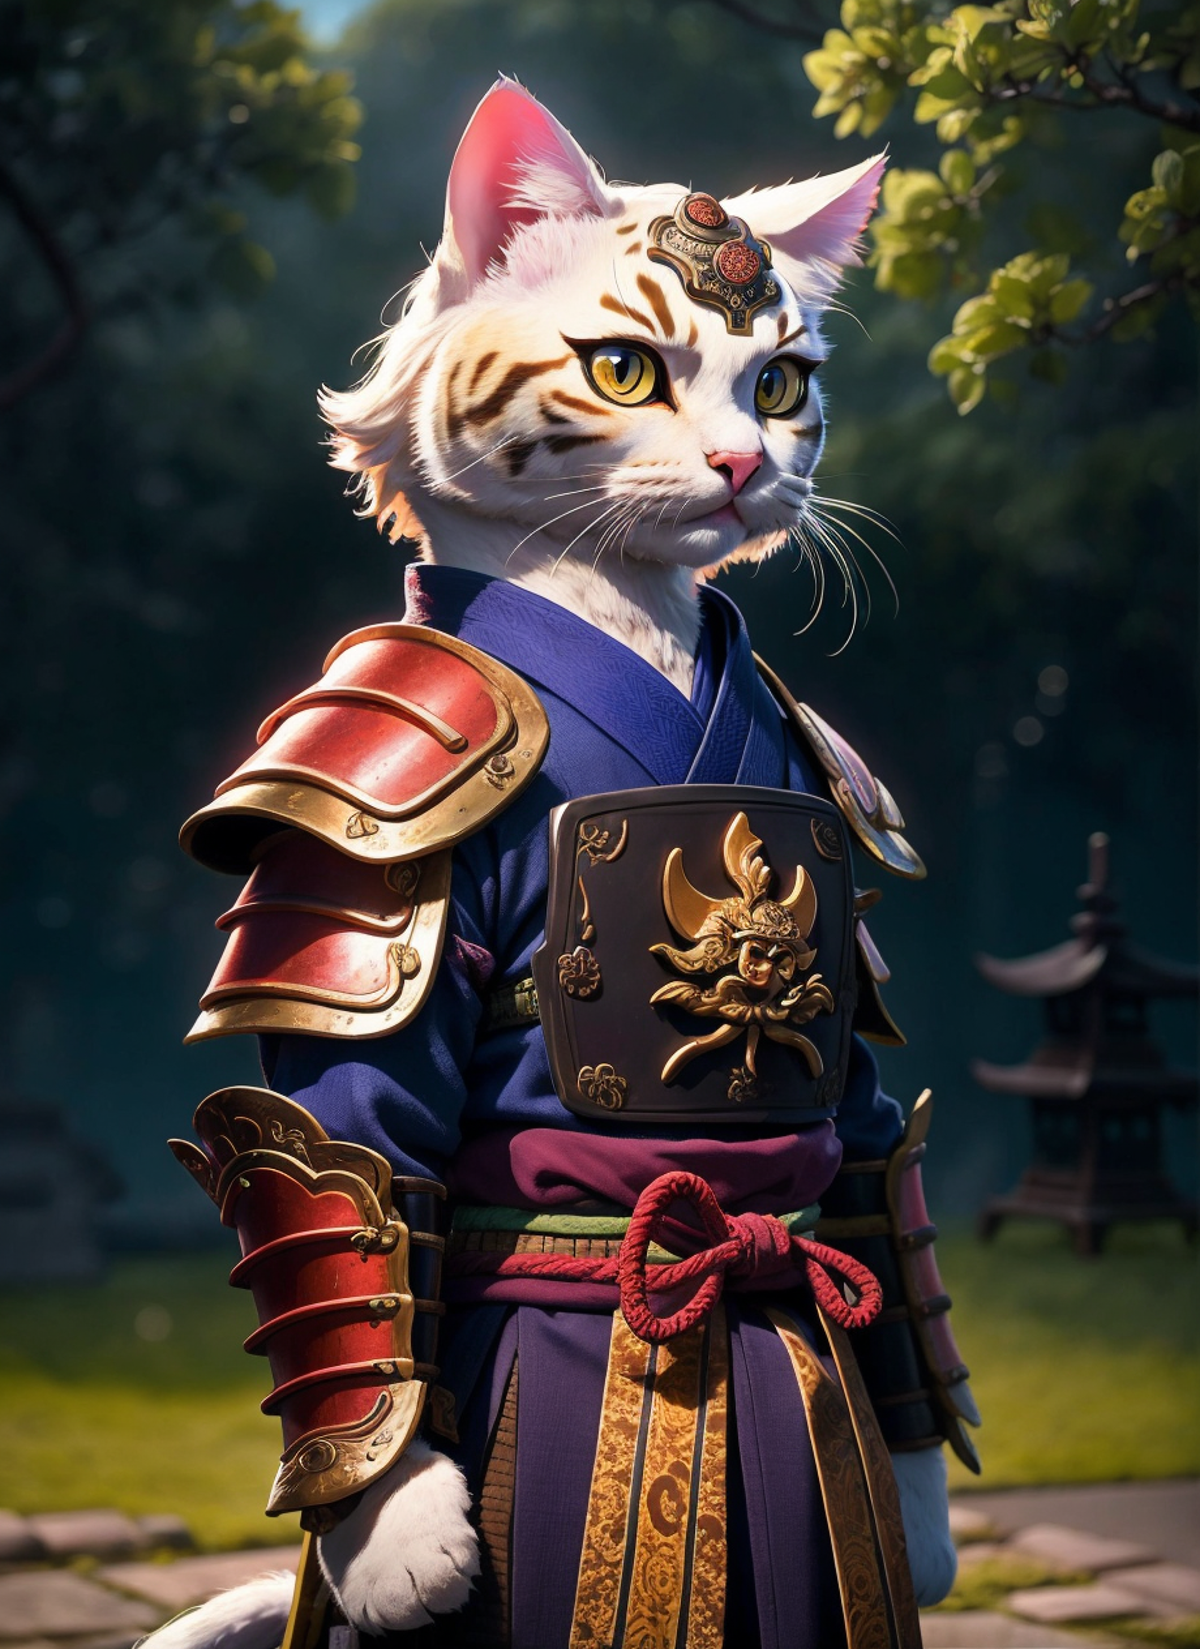 A samurai cat wearing a blue kimono and holding a sword.